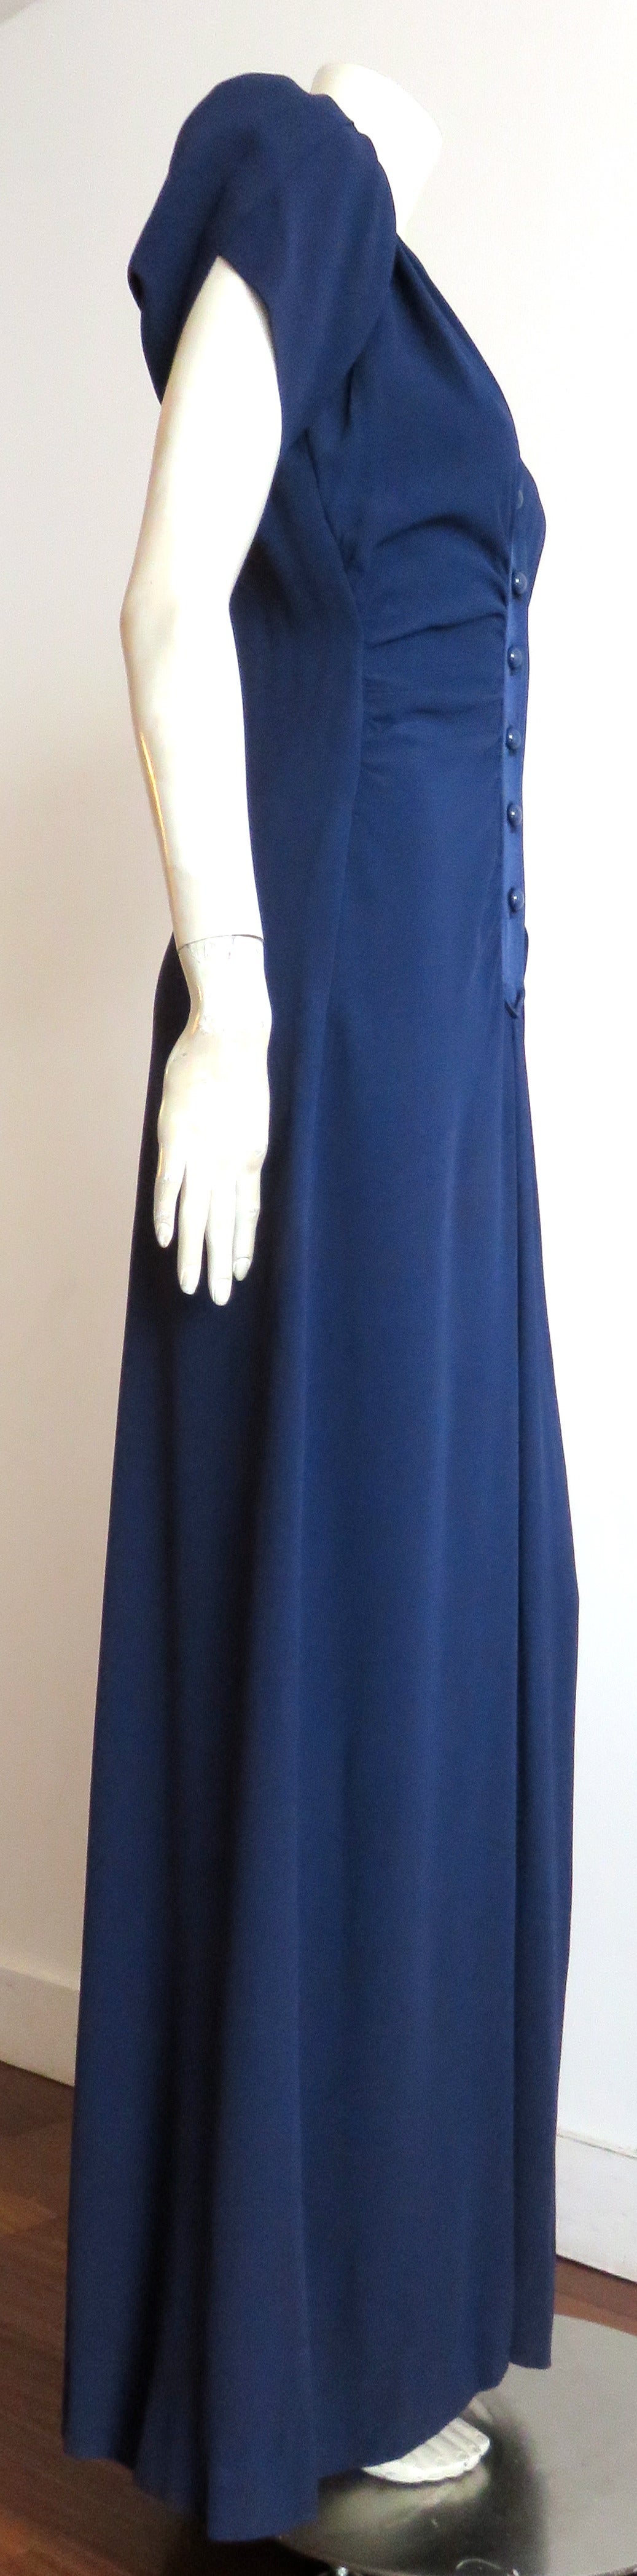 Women's 1983 YVES SAINT LAURENT 40's style blue crepe dress For Sale